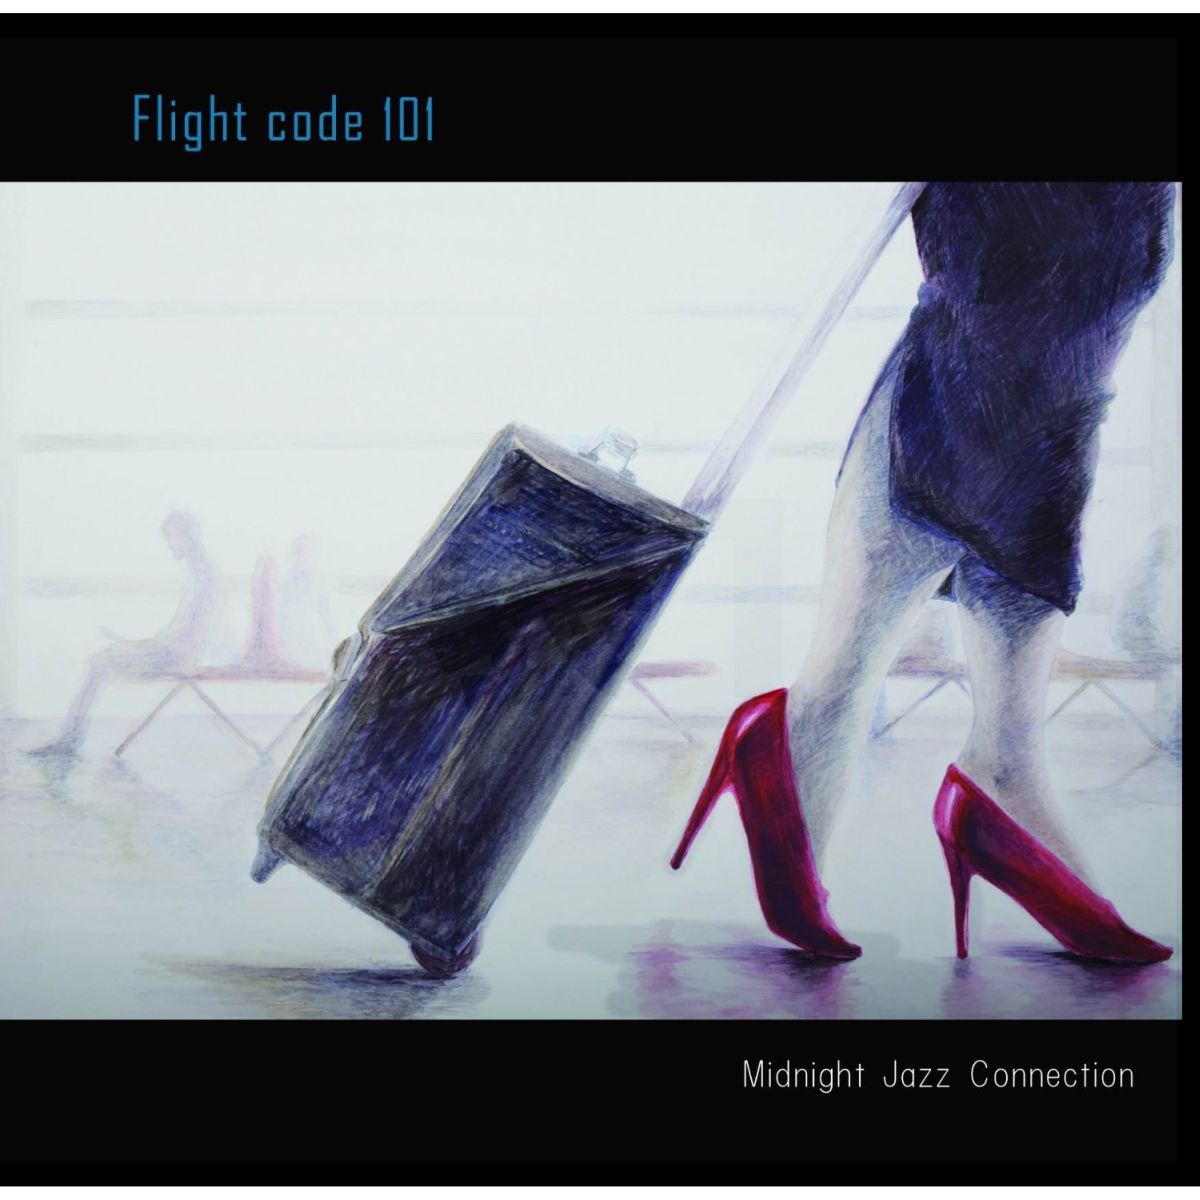 Midnight Jazz Connectionフライト コード ワンオーワン 発売日：2013年11月20日 予約締切日：2013年11月16日 FLIGHT CODE 101 JAN：4571465210014 BSCTー13071 Buzzy Sound Records Aki 須藤拓也 (株)ディスクユニオン [Disc1] 『Flight code 101』／CD アーティスト：Midnight Jazz Connection／Aki／須藤拓也 ほか CD ジャズ 日本のジャズ